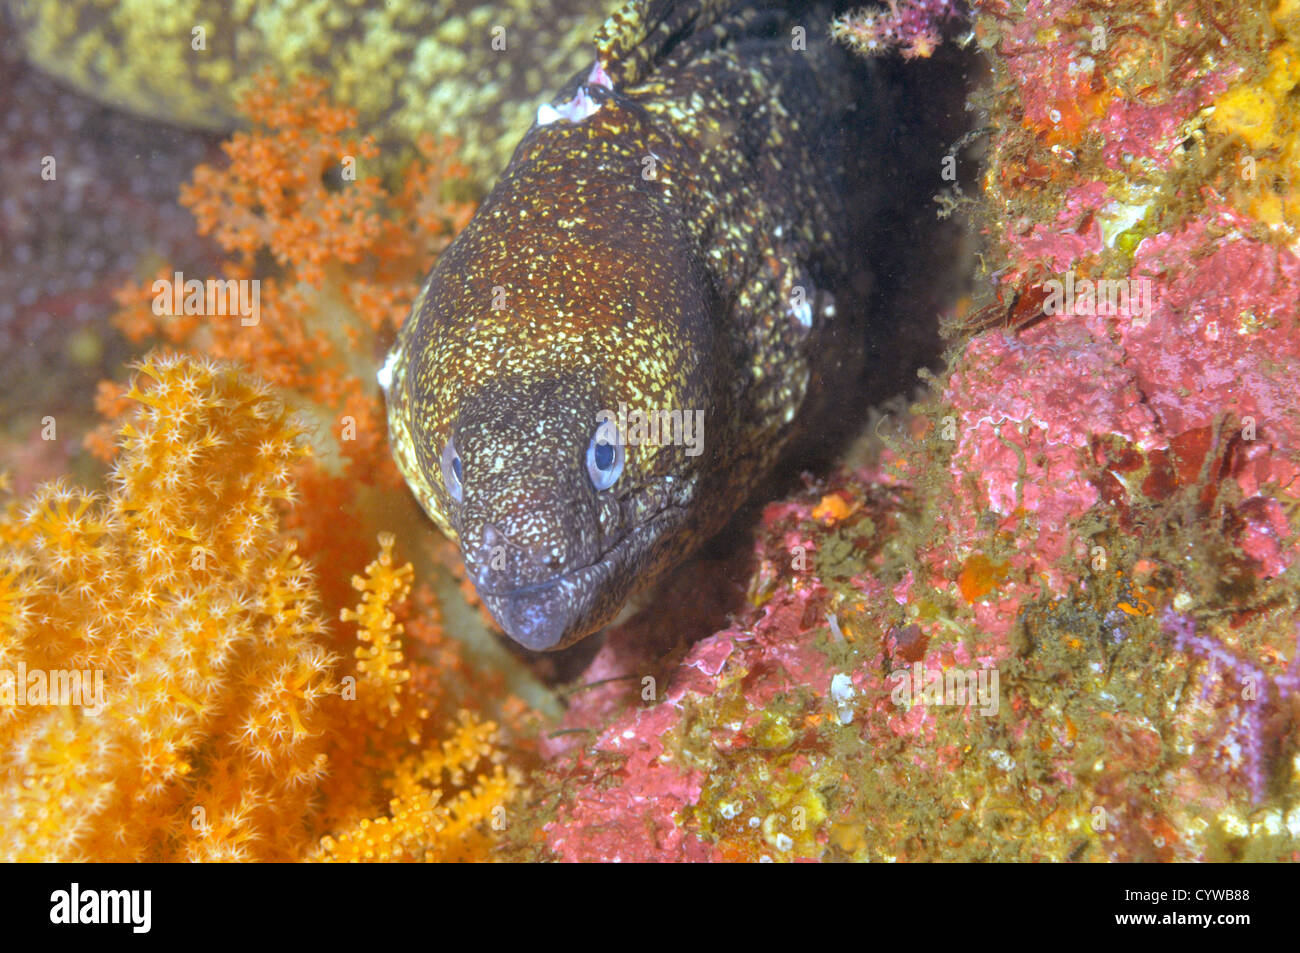 Common moray eel, Chinsen, Gymnothorax kidako, Chinsen, Atami, Izu peninsula, Japan Stock Photo